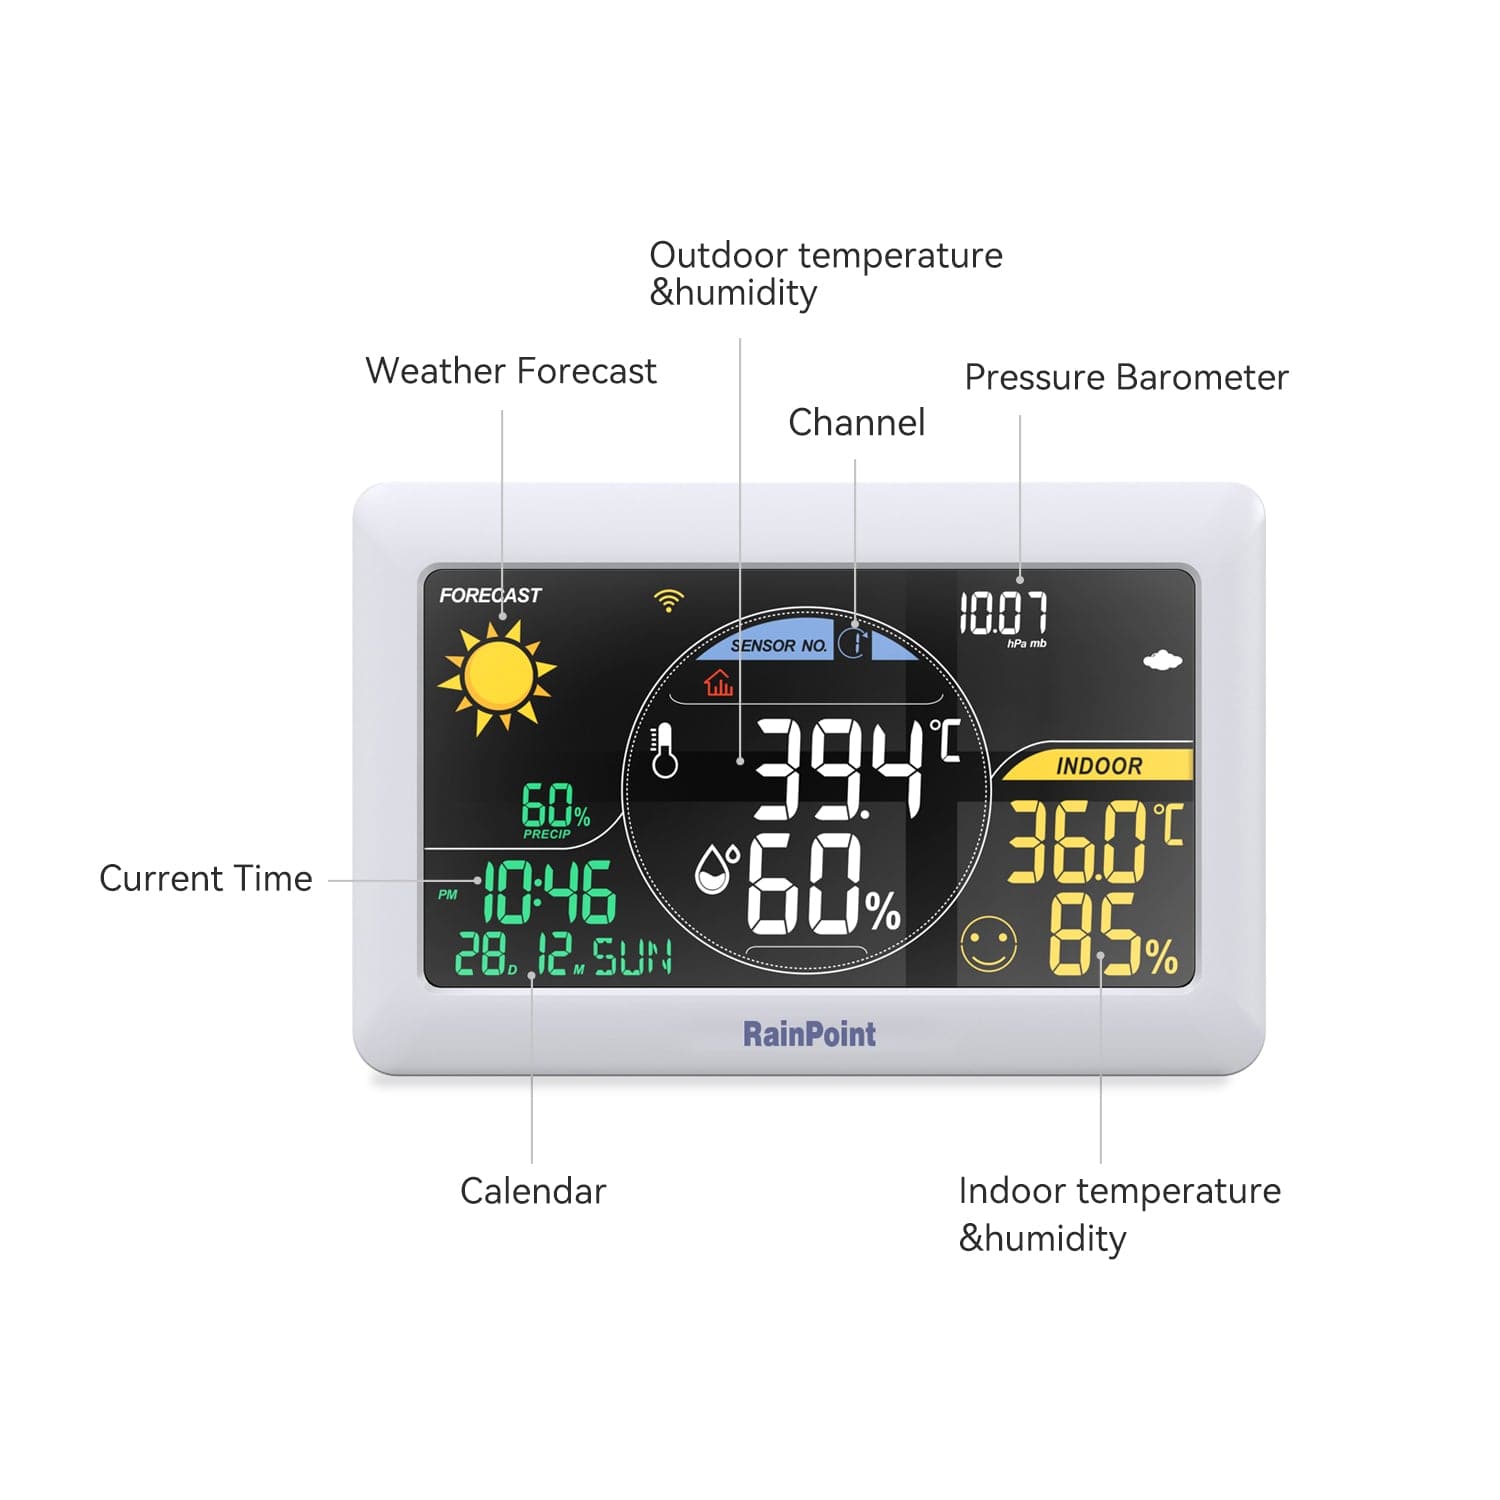 Smart + Pool Thermometer Model No: HCS528+HCS015 – RainPoint Irrigation